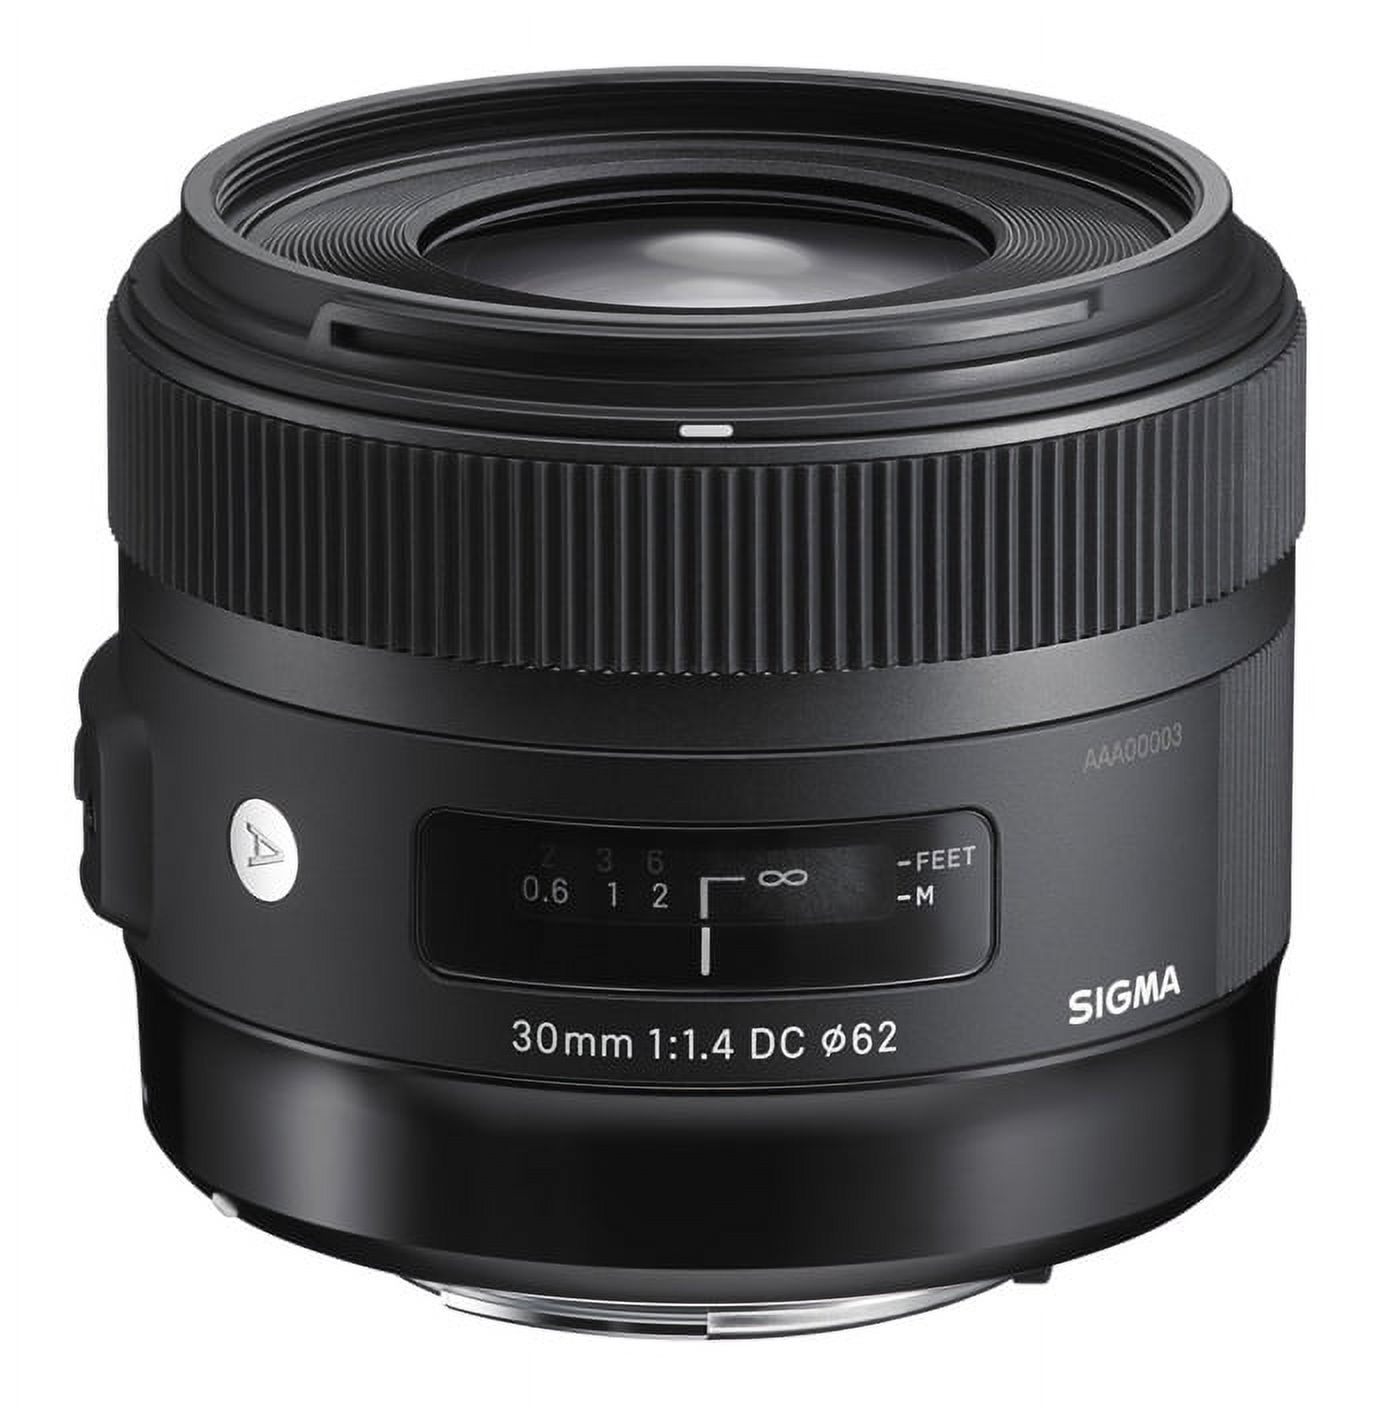 Canon EOS Rebel T6 Digital SLR Camera Kit w/ EF-S 18-55mm f/3.5-5.6 IS II + 75-300mm f/4-5.6 III + Sigma 30mm f/1.4 Art Lens + 0.43x Macro + 2.2x Telephoto + 64GB + Flash + Bag + LED Light + Filters - image 3 of 11